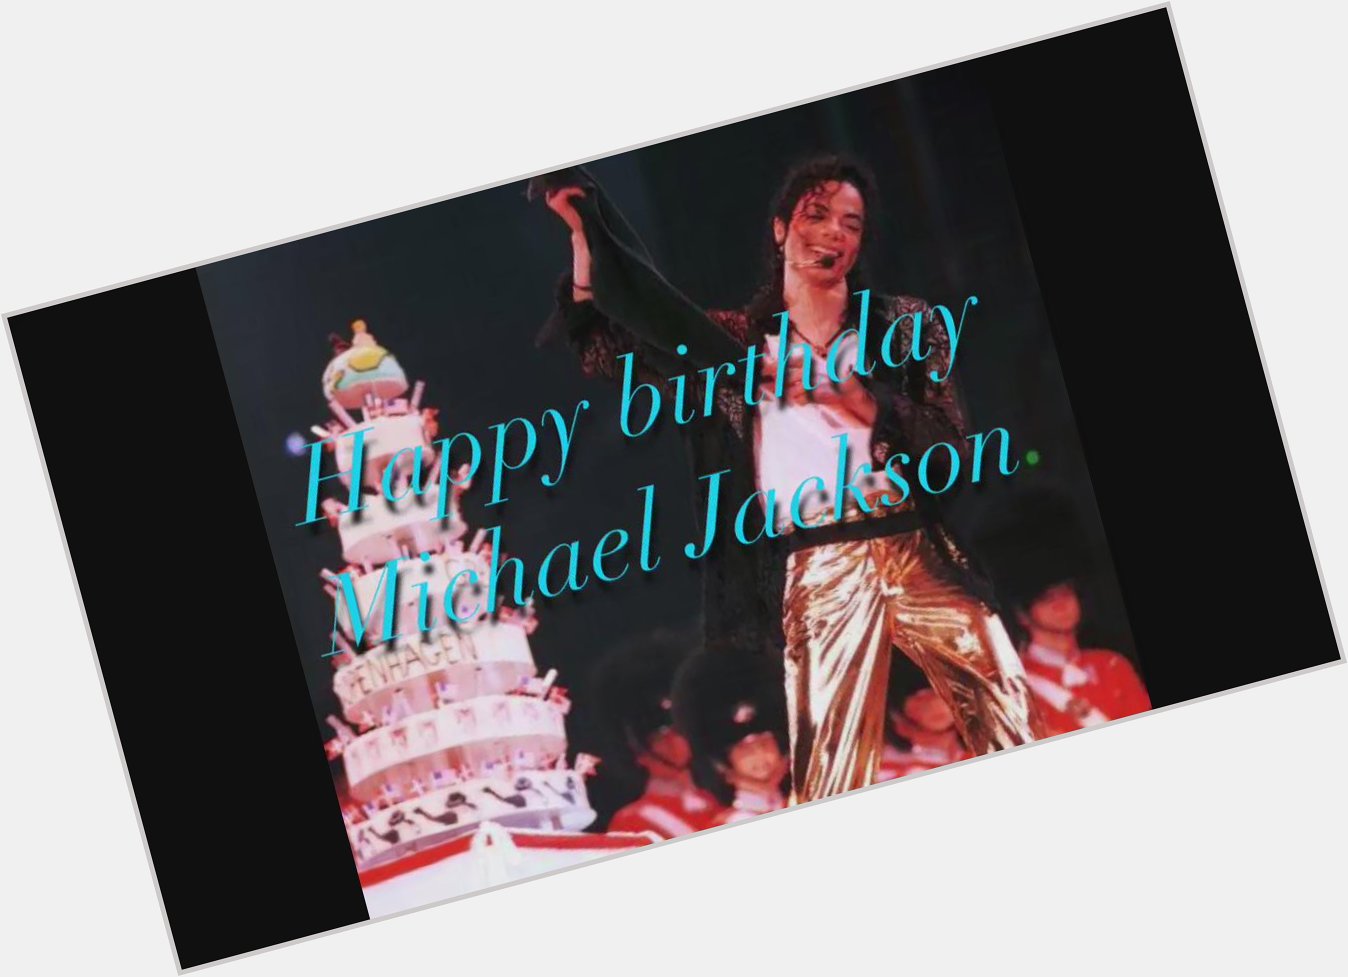 Happy Birthday. Michael Jackson.                                                    